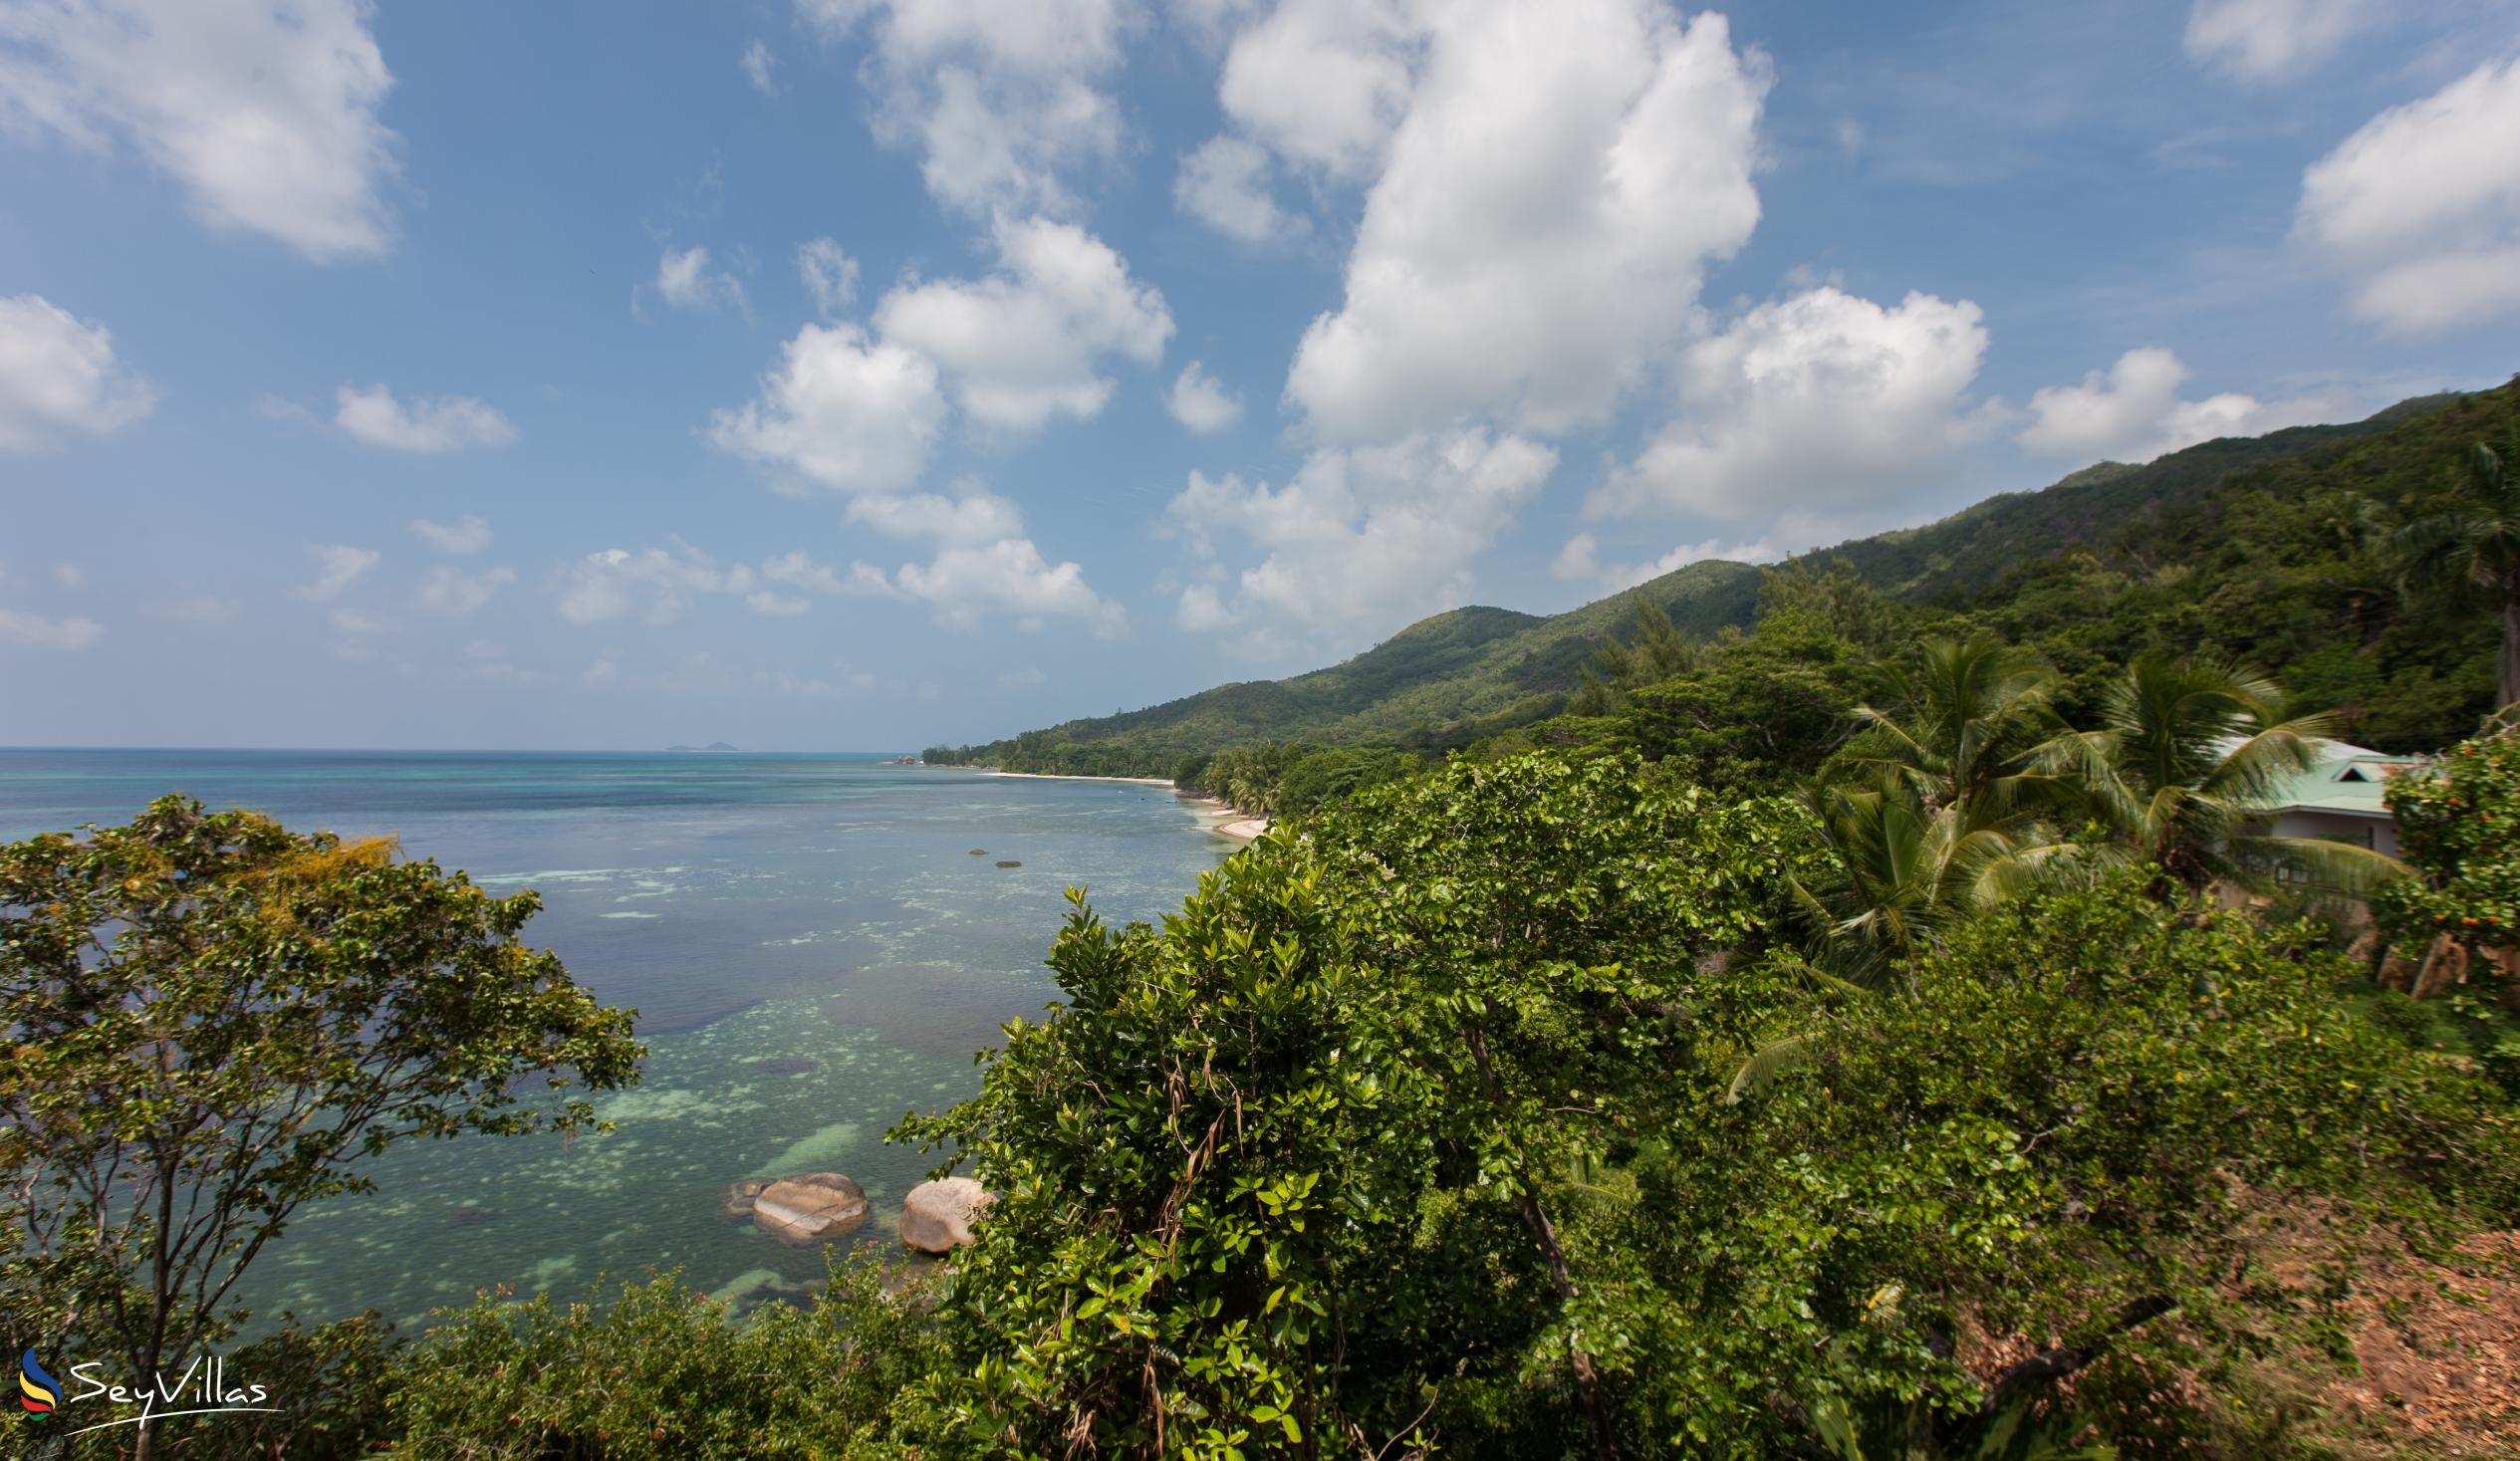 Foto 48: Coco de Mer & Black Parrot Suites - Location - Praslin (Seychelles)